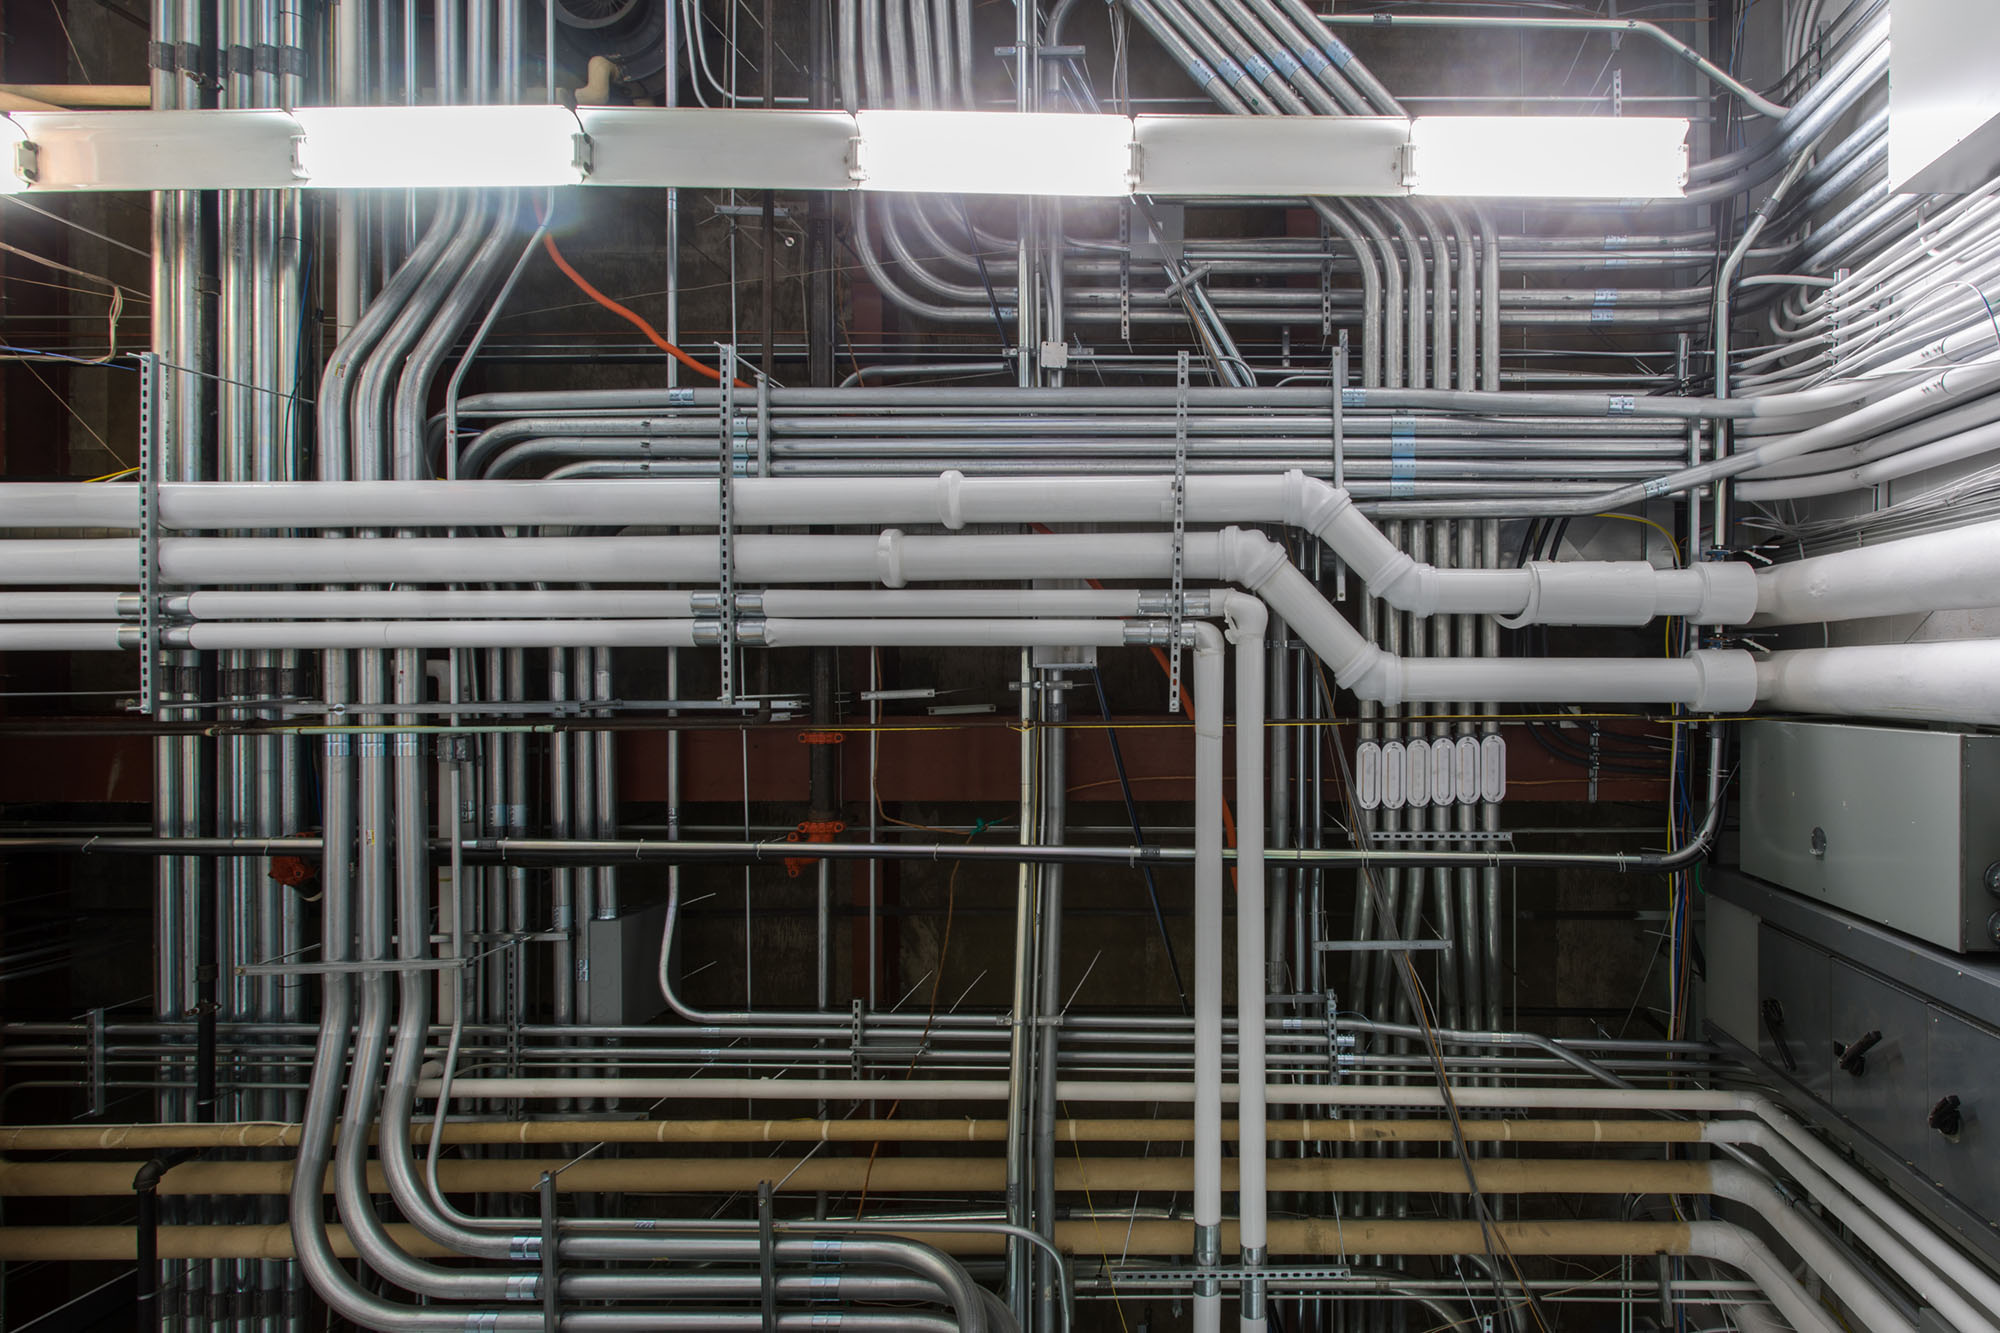 Complex but well-organized electrical conduit run